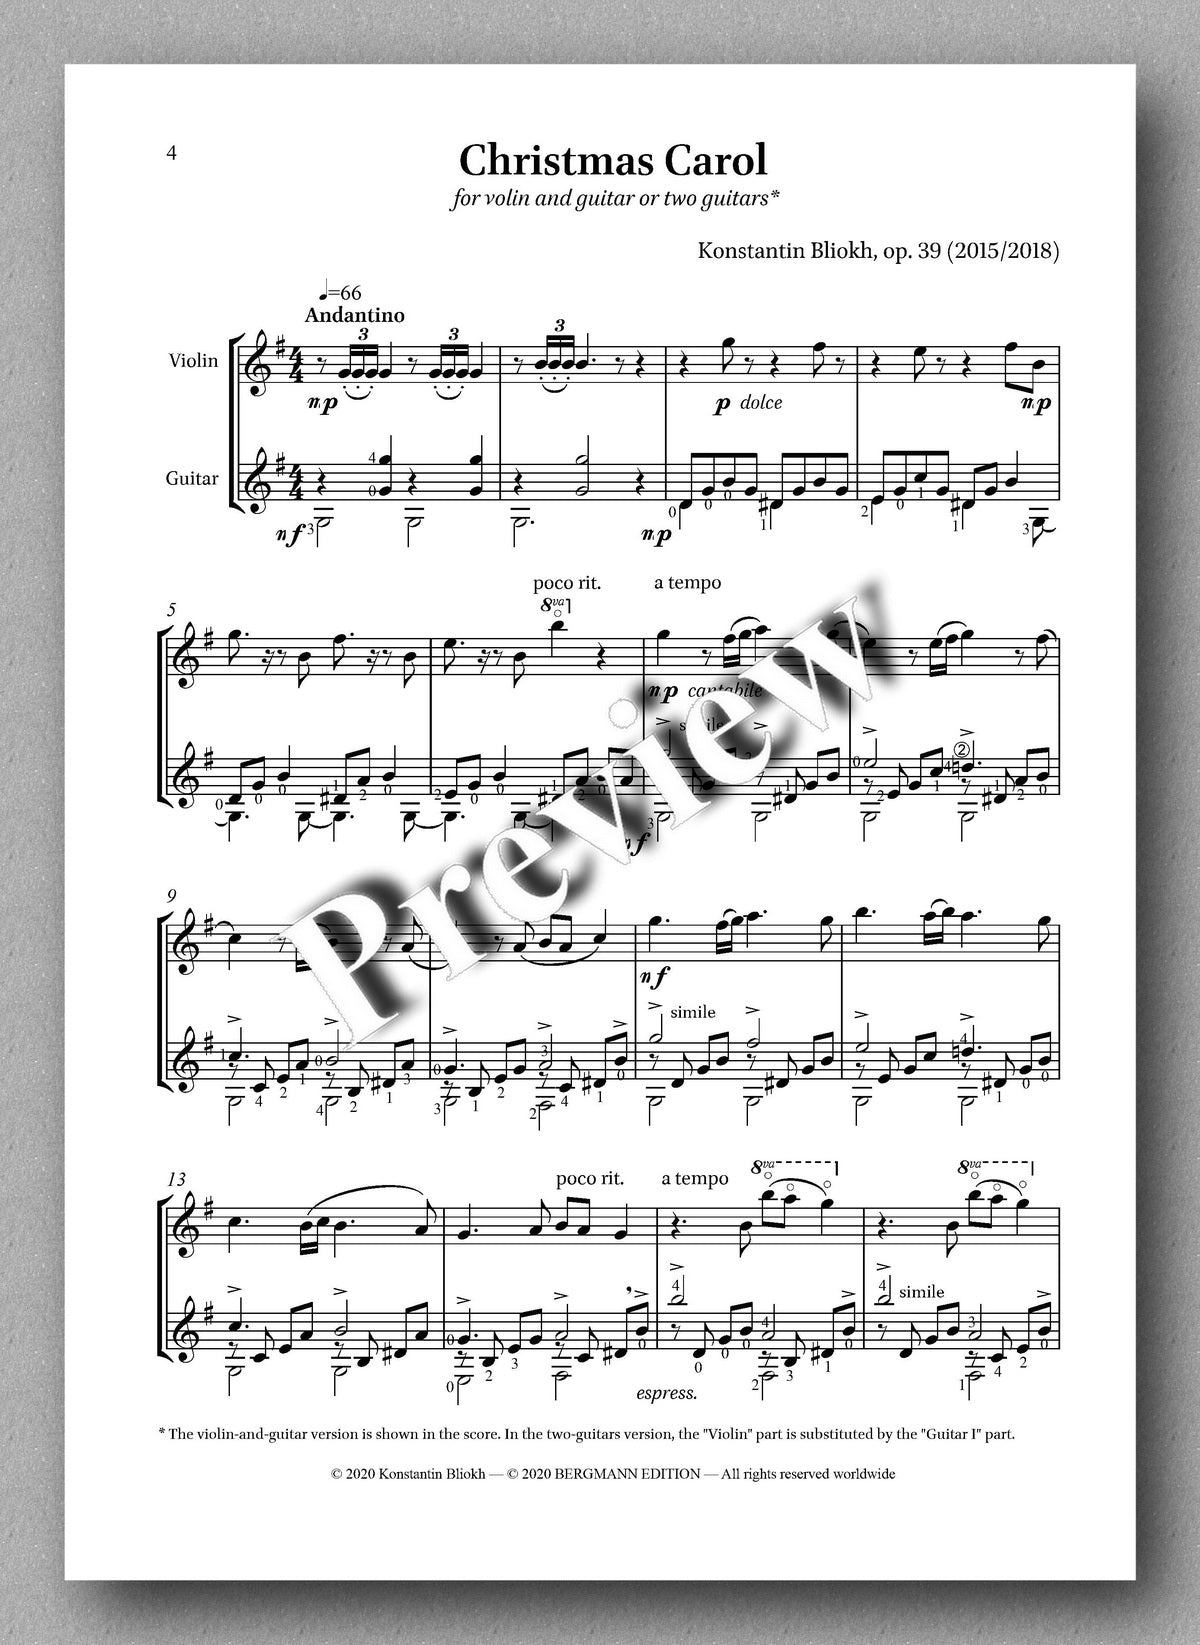 Konstantin Bliokh, Christmas Carol, op. 39 - music score